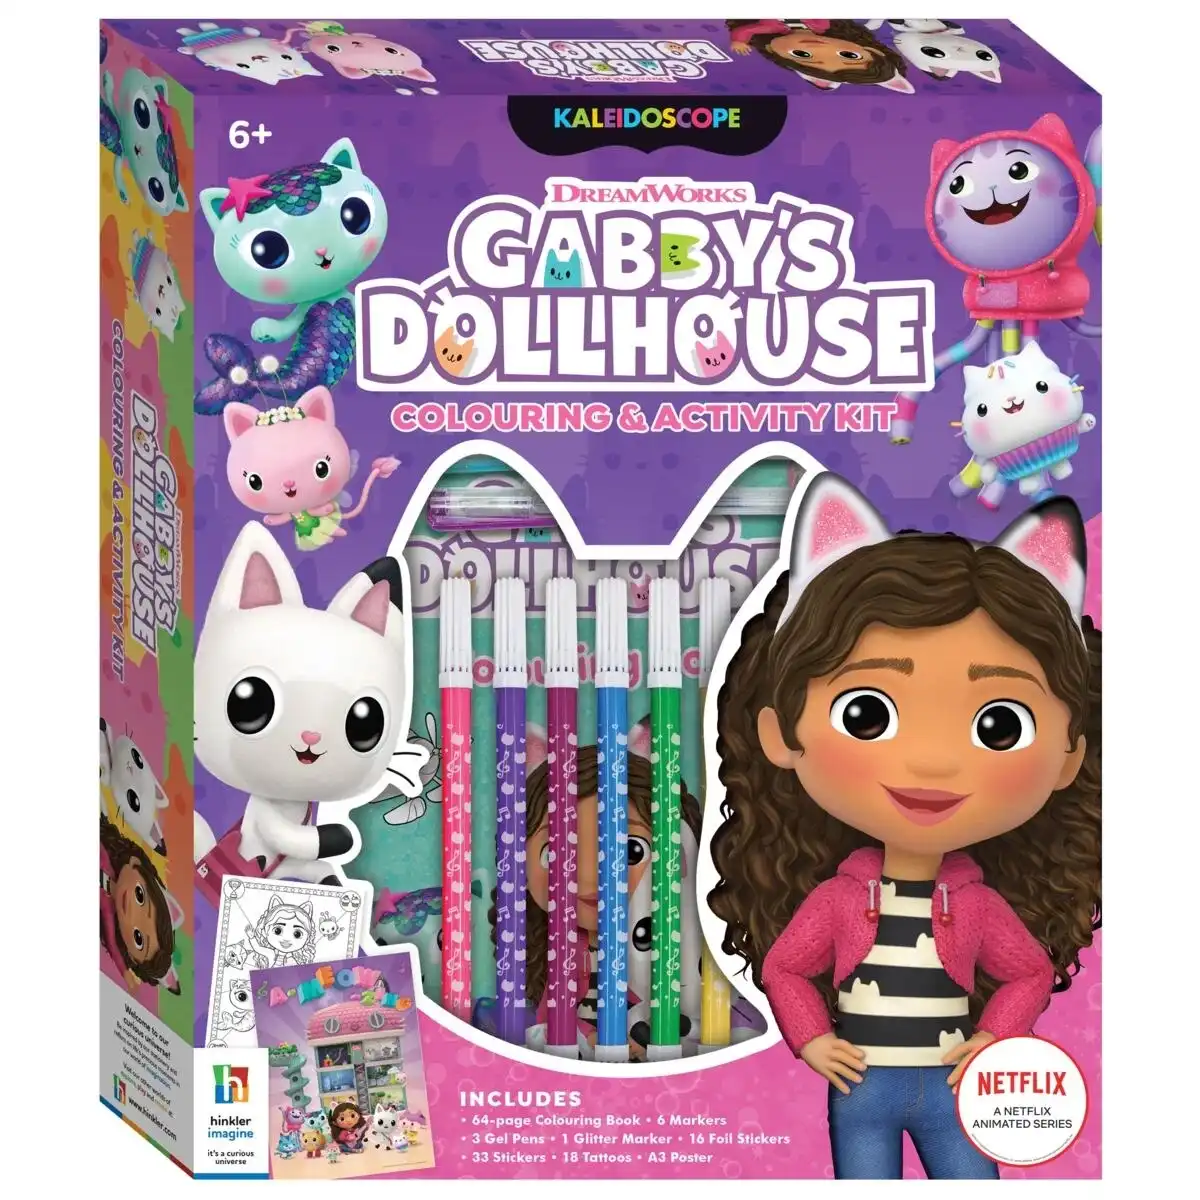 Gabby's Dollhouse Colouring & Activity Kit